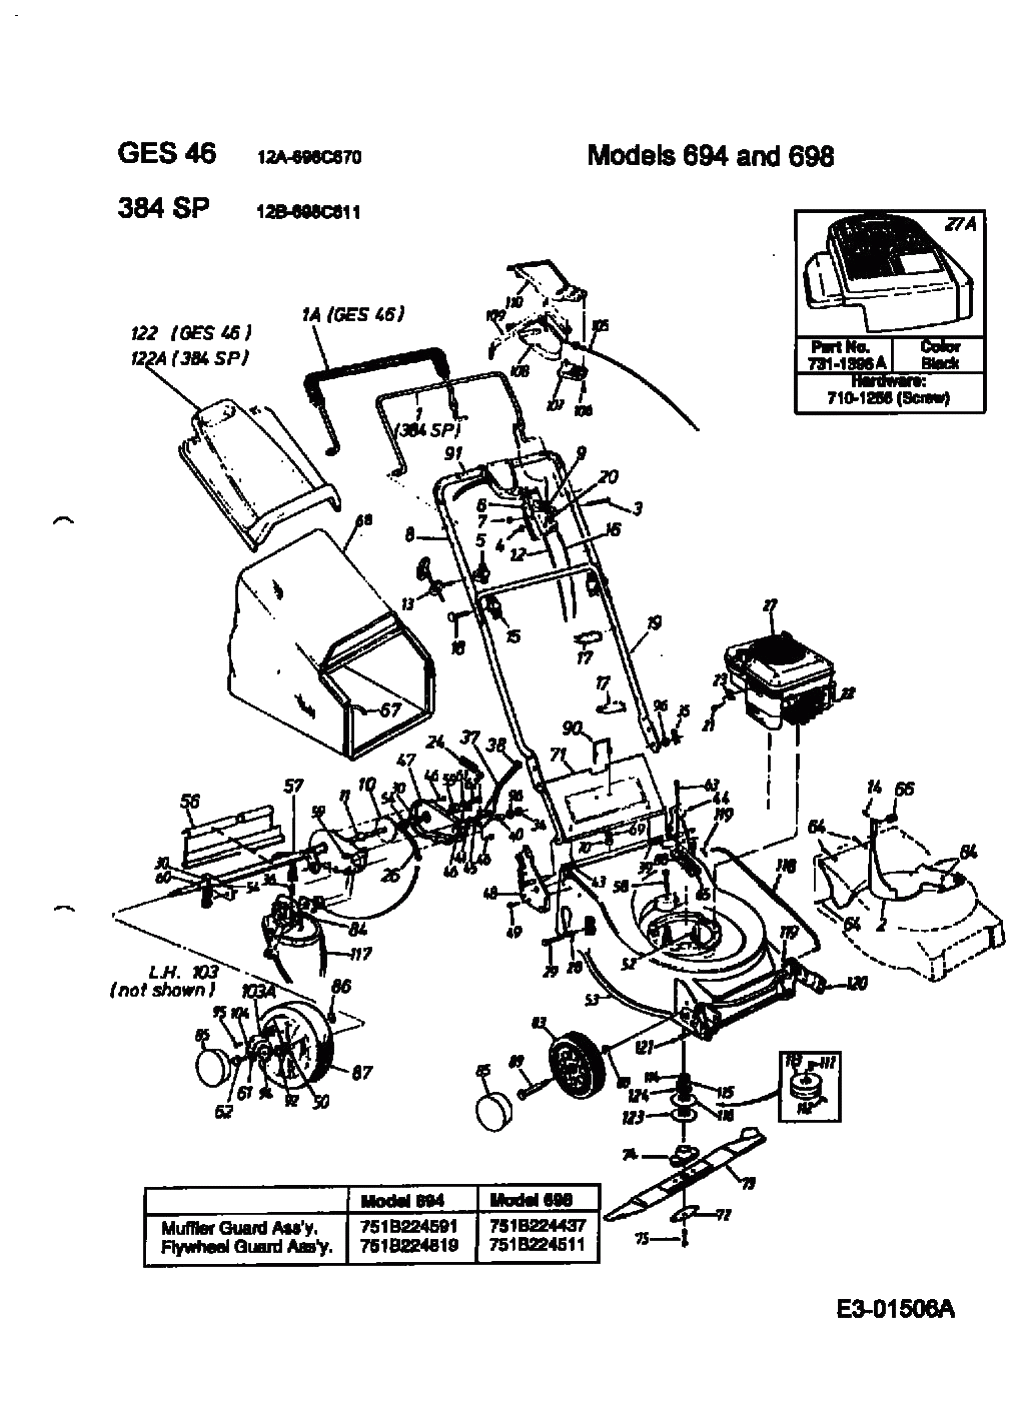 MTD Артикул 12A-698C670 (год выпуска 2000). Основная деталировка